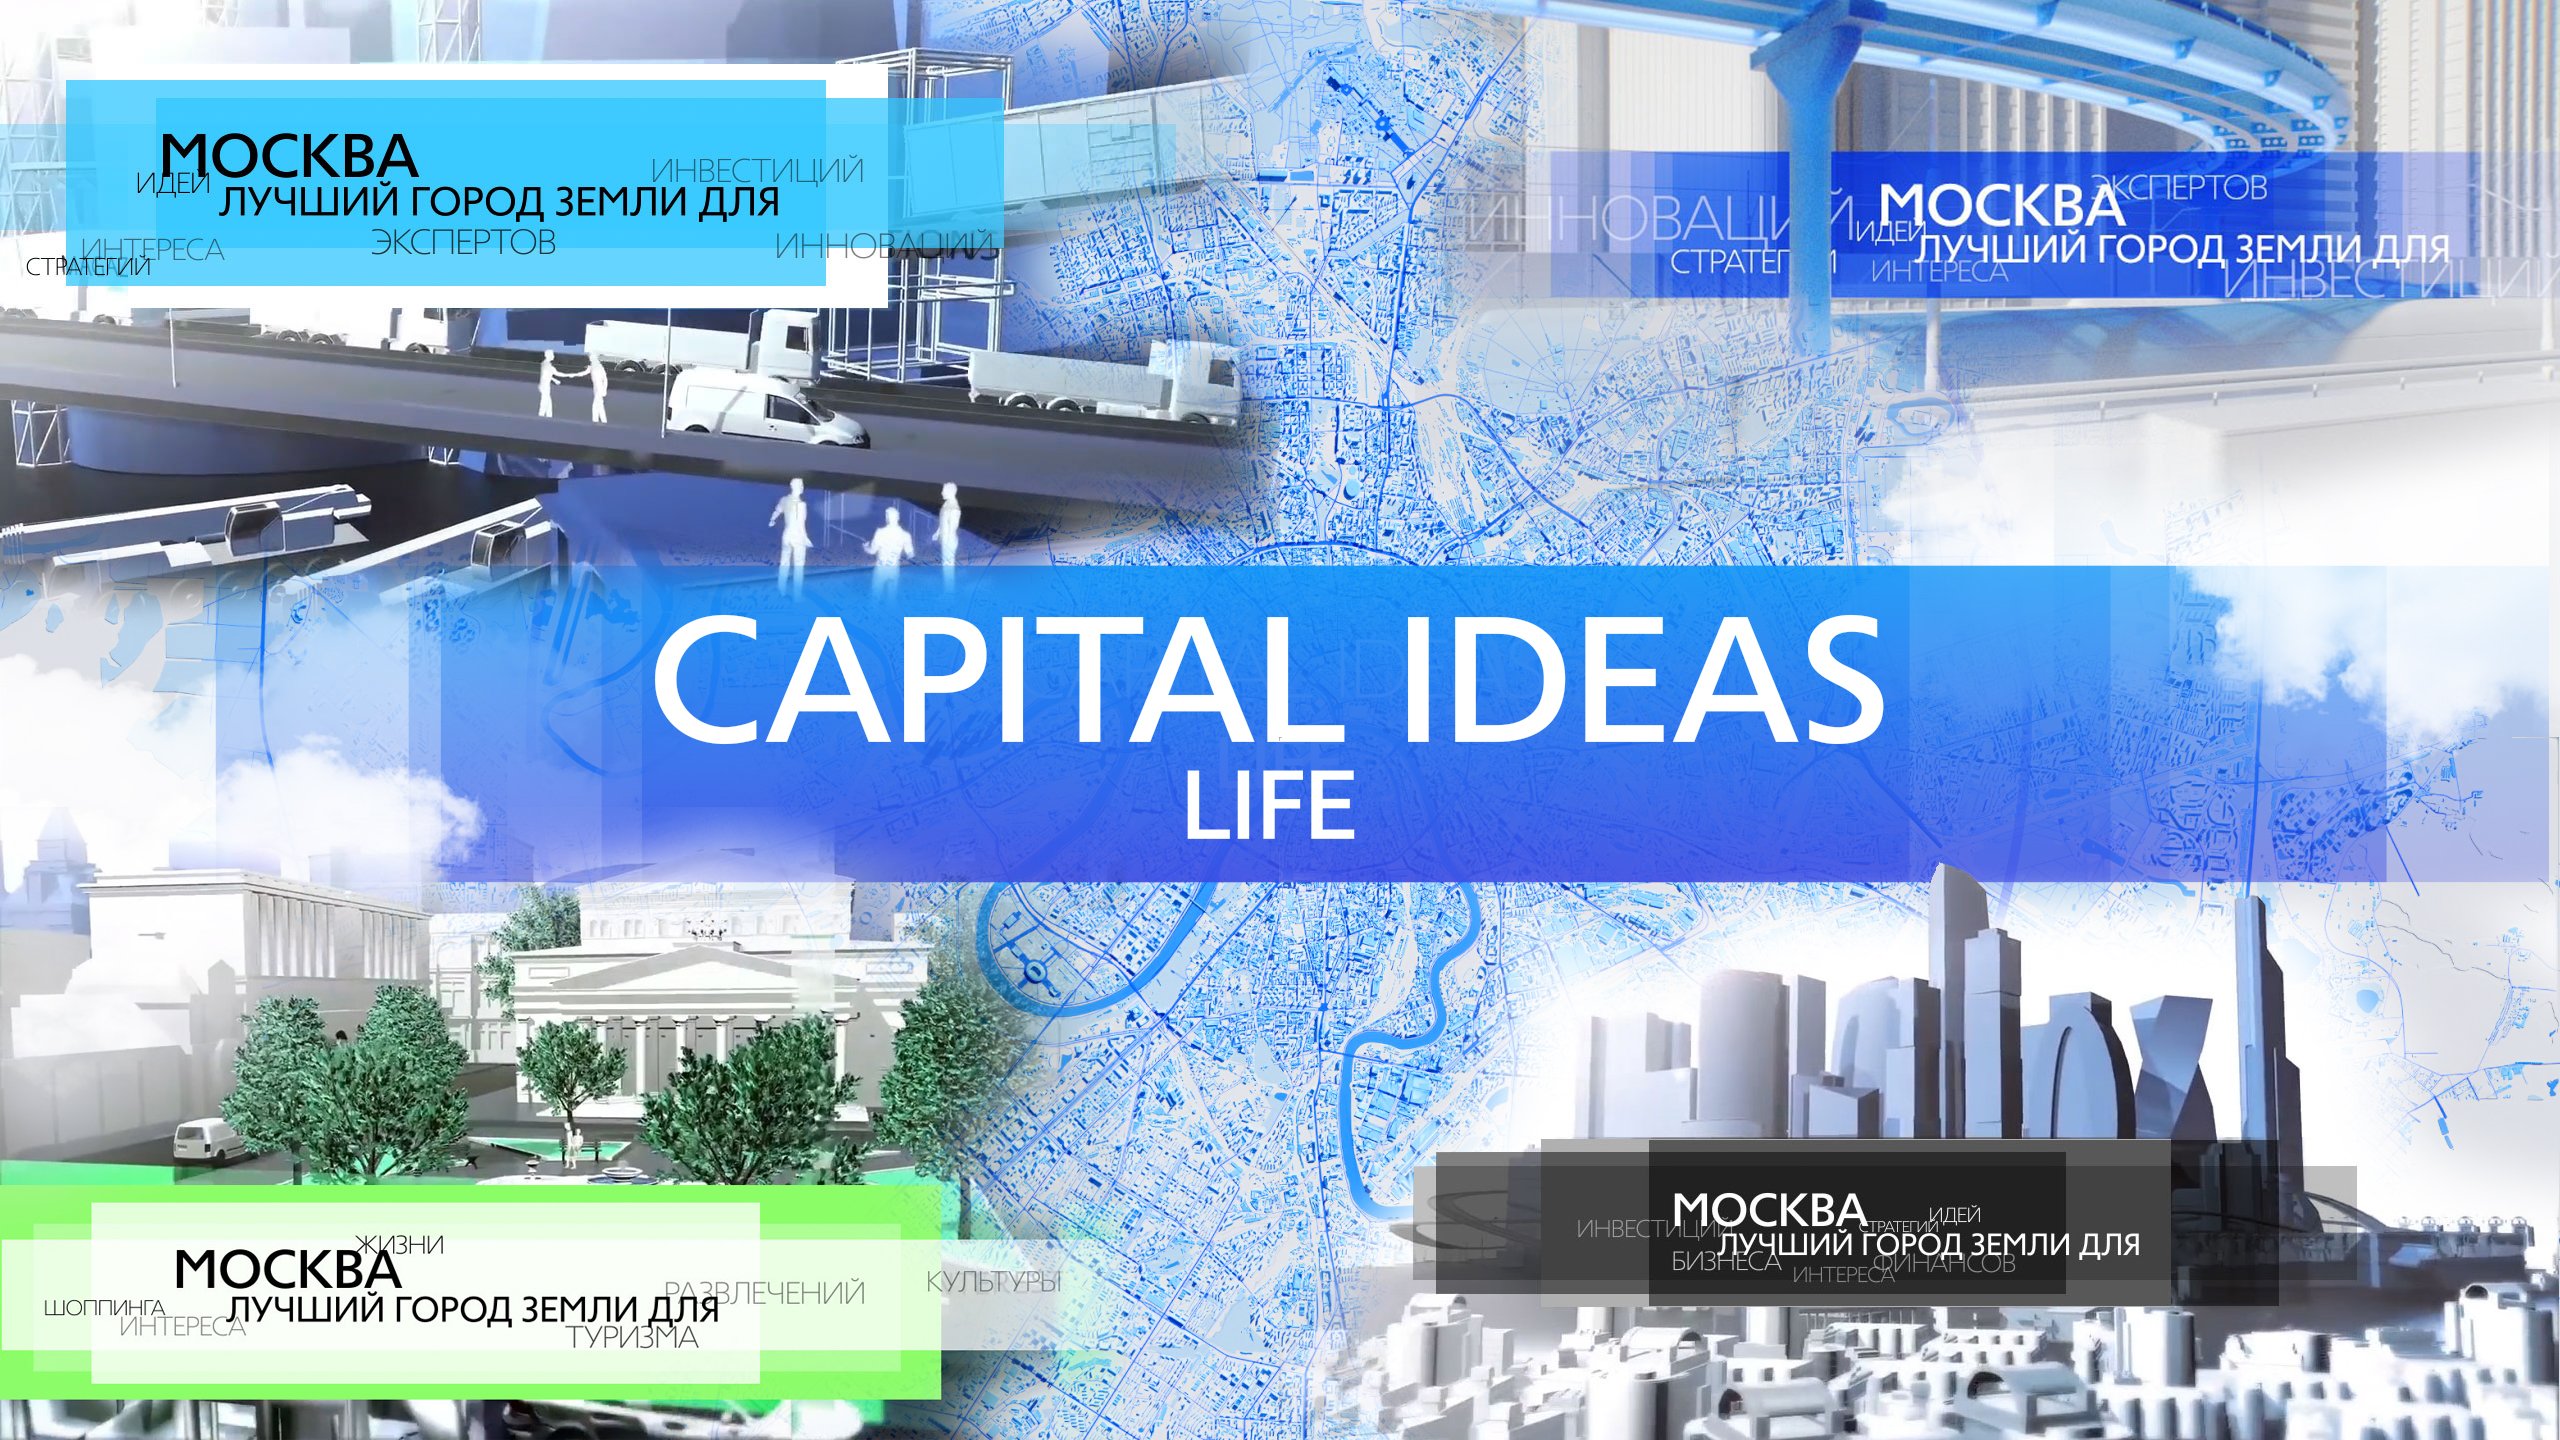 Capital Ideas LIFE - (Москва - лучший город Земли)